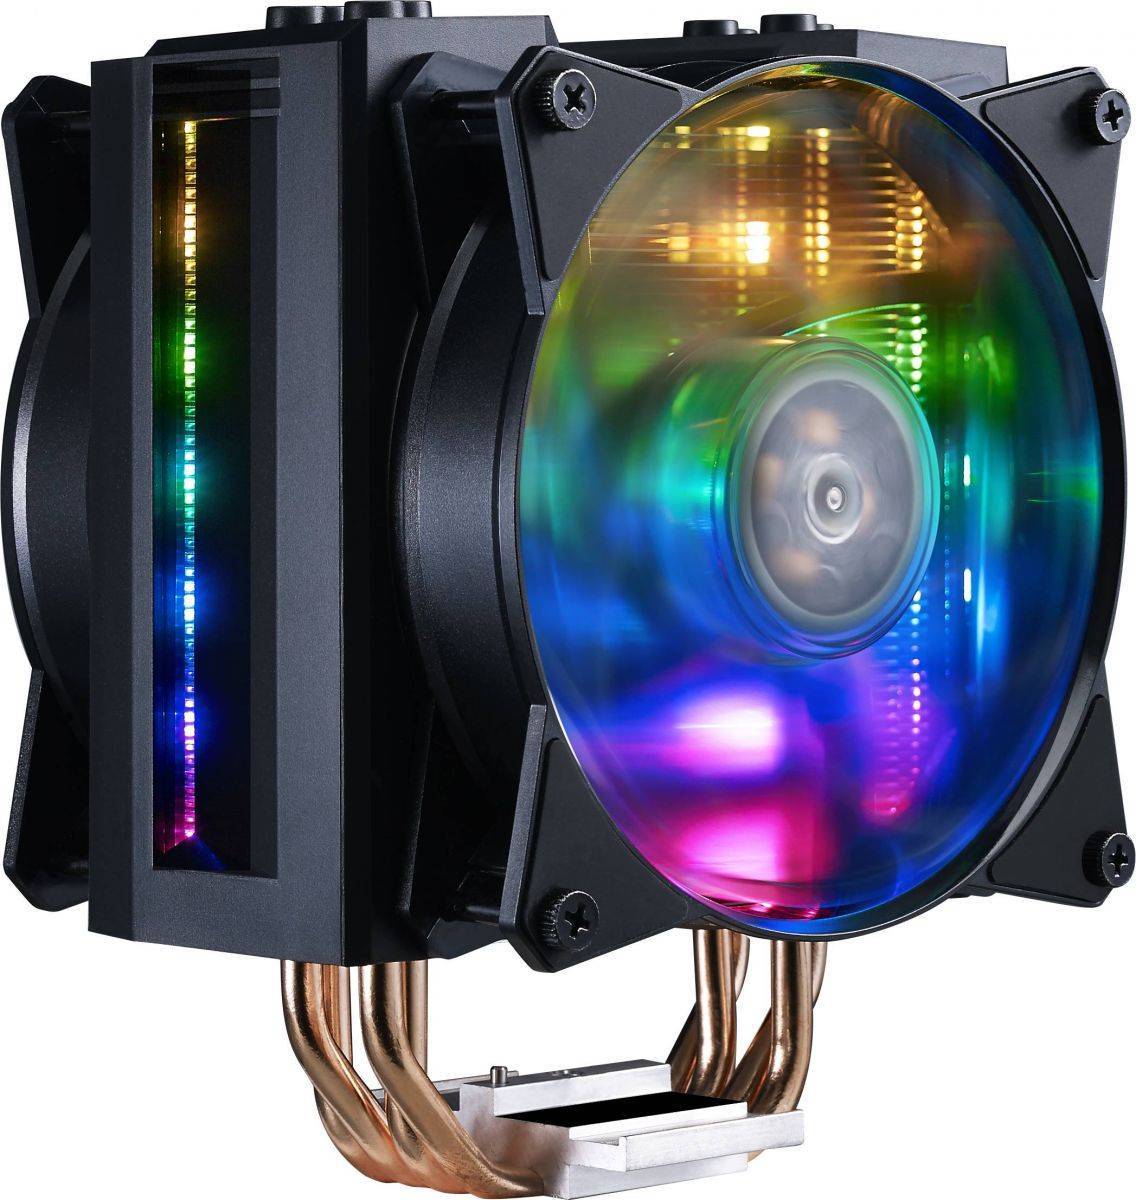 Cooler Master CPU Cooler MasterAir MA410M, 600-1800 RPM, 150W, addressable RGB, lighting controller, Full Socket Support